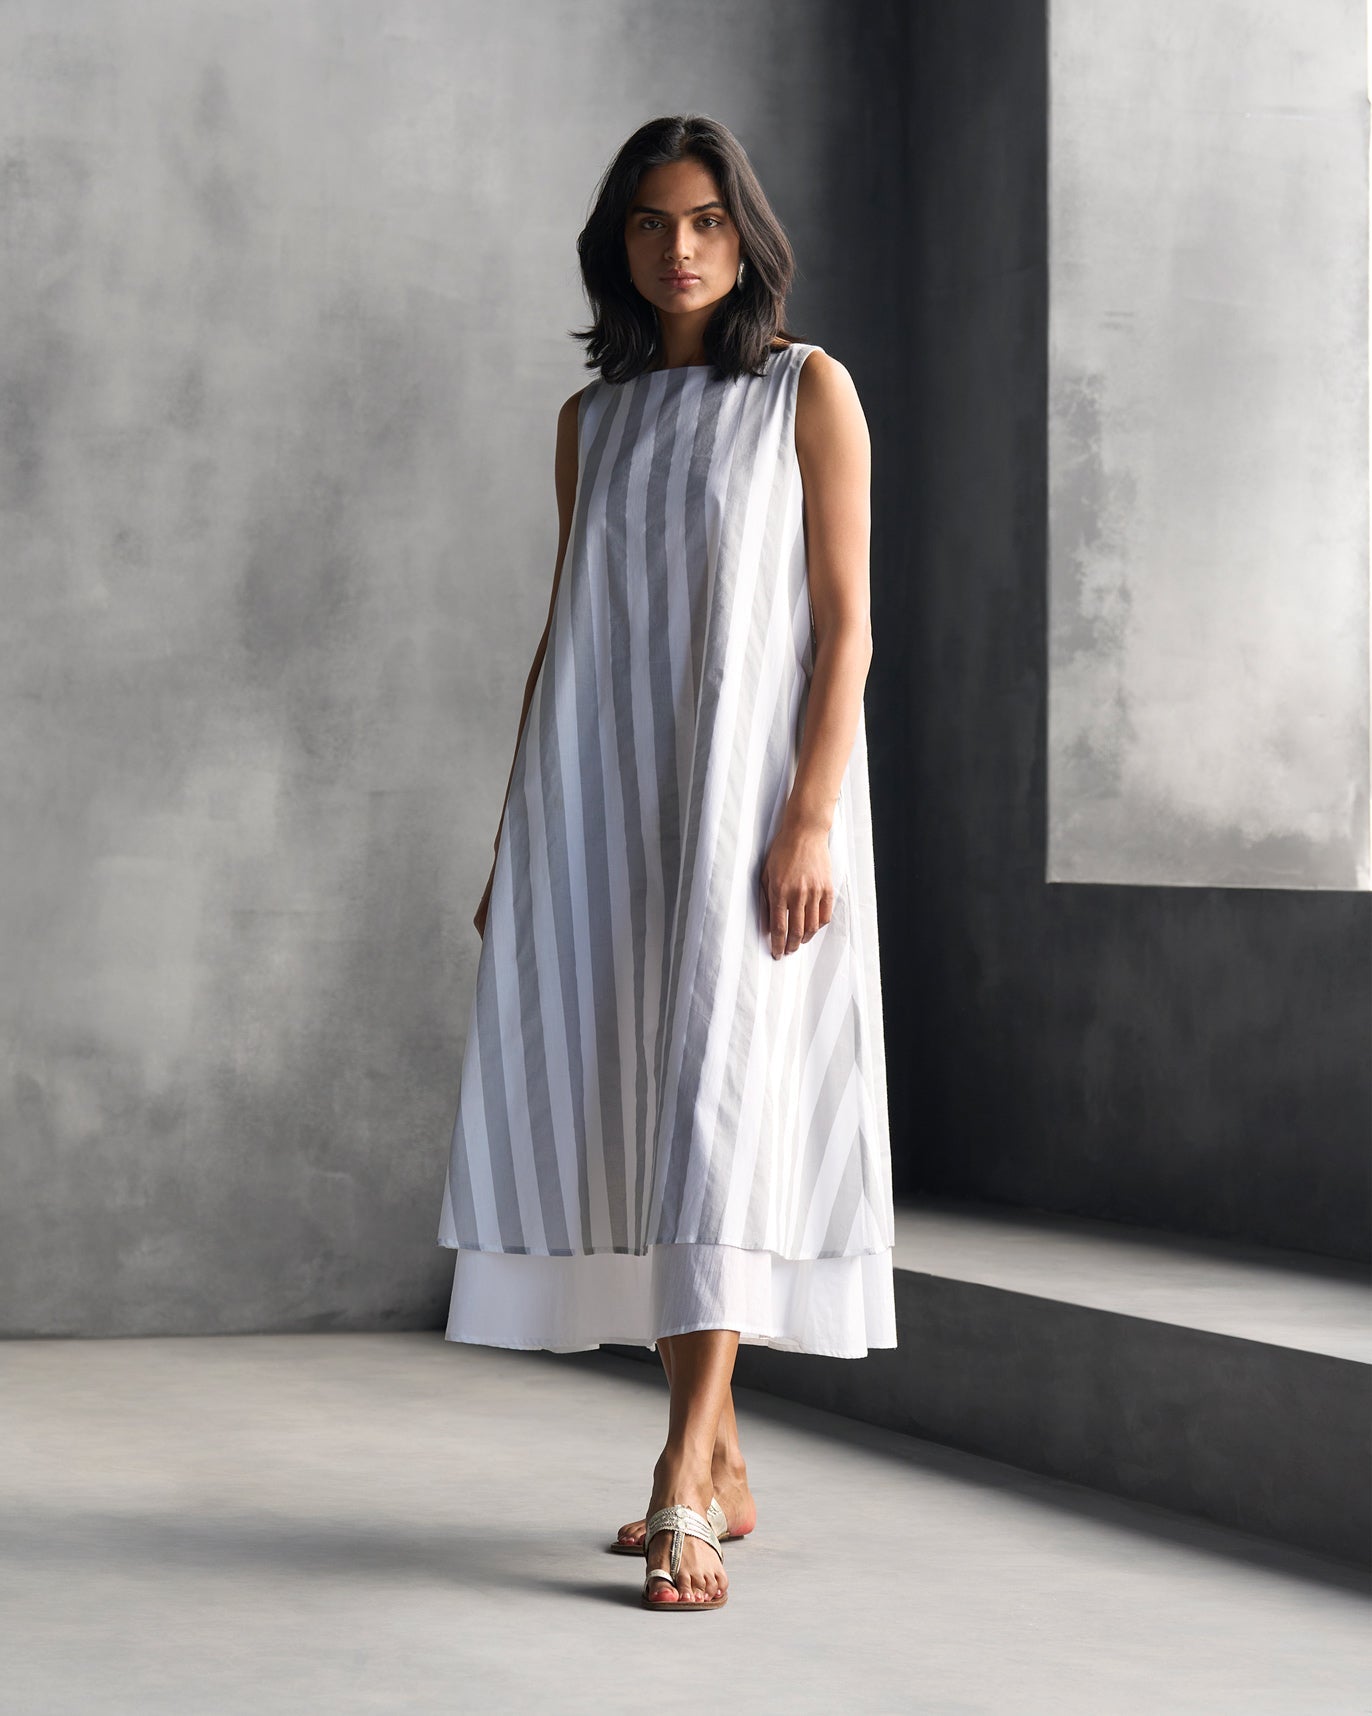 Double Layer Dress - White & Grey